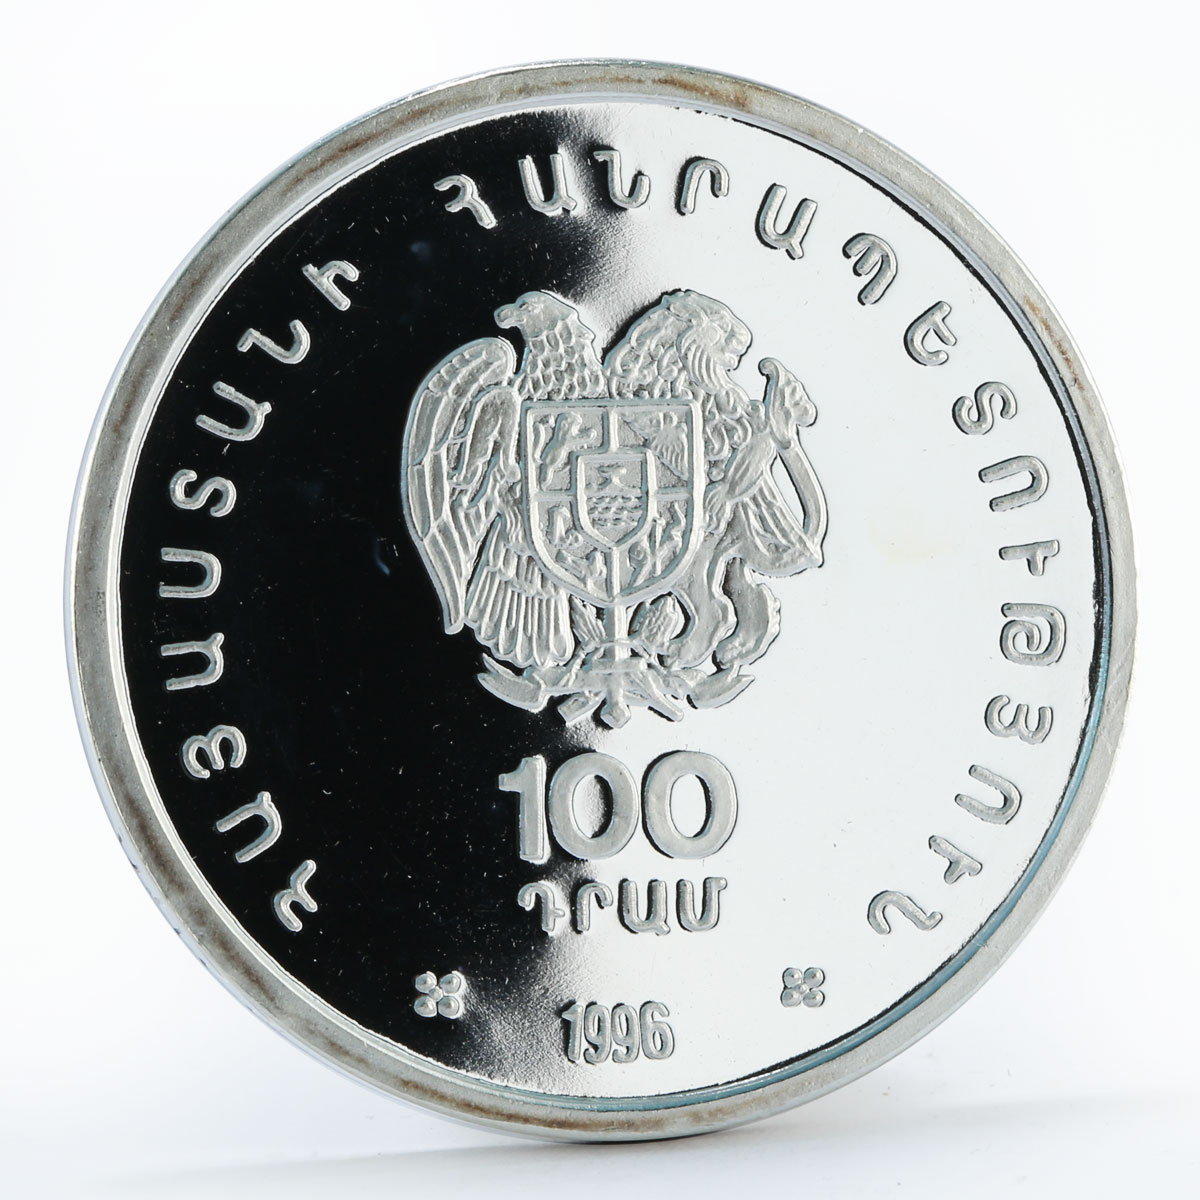 Armenia 100 drams XXXII Chess Olympiad in Yerevan proof silver coin 1996